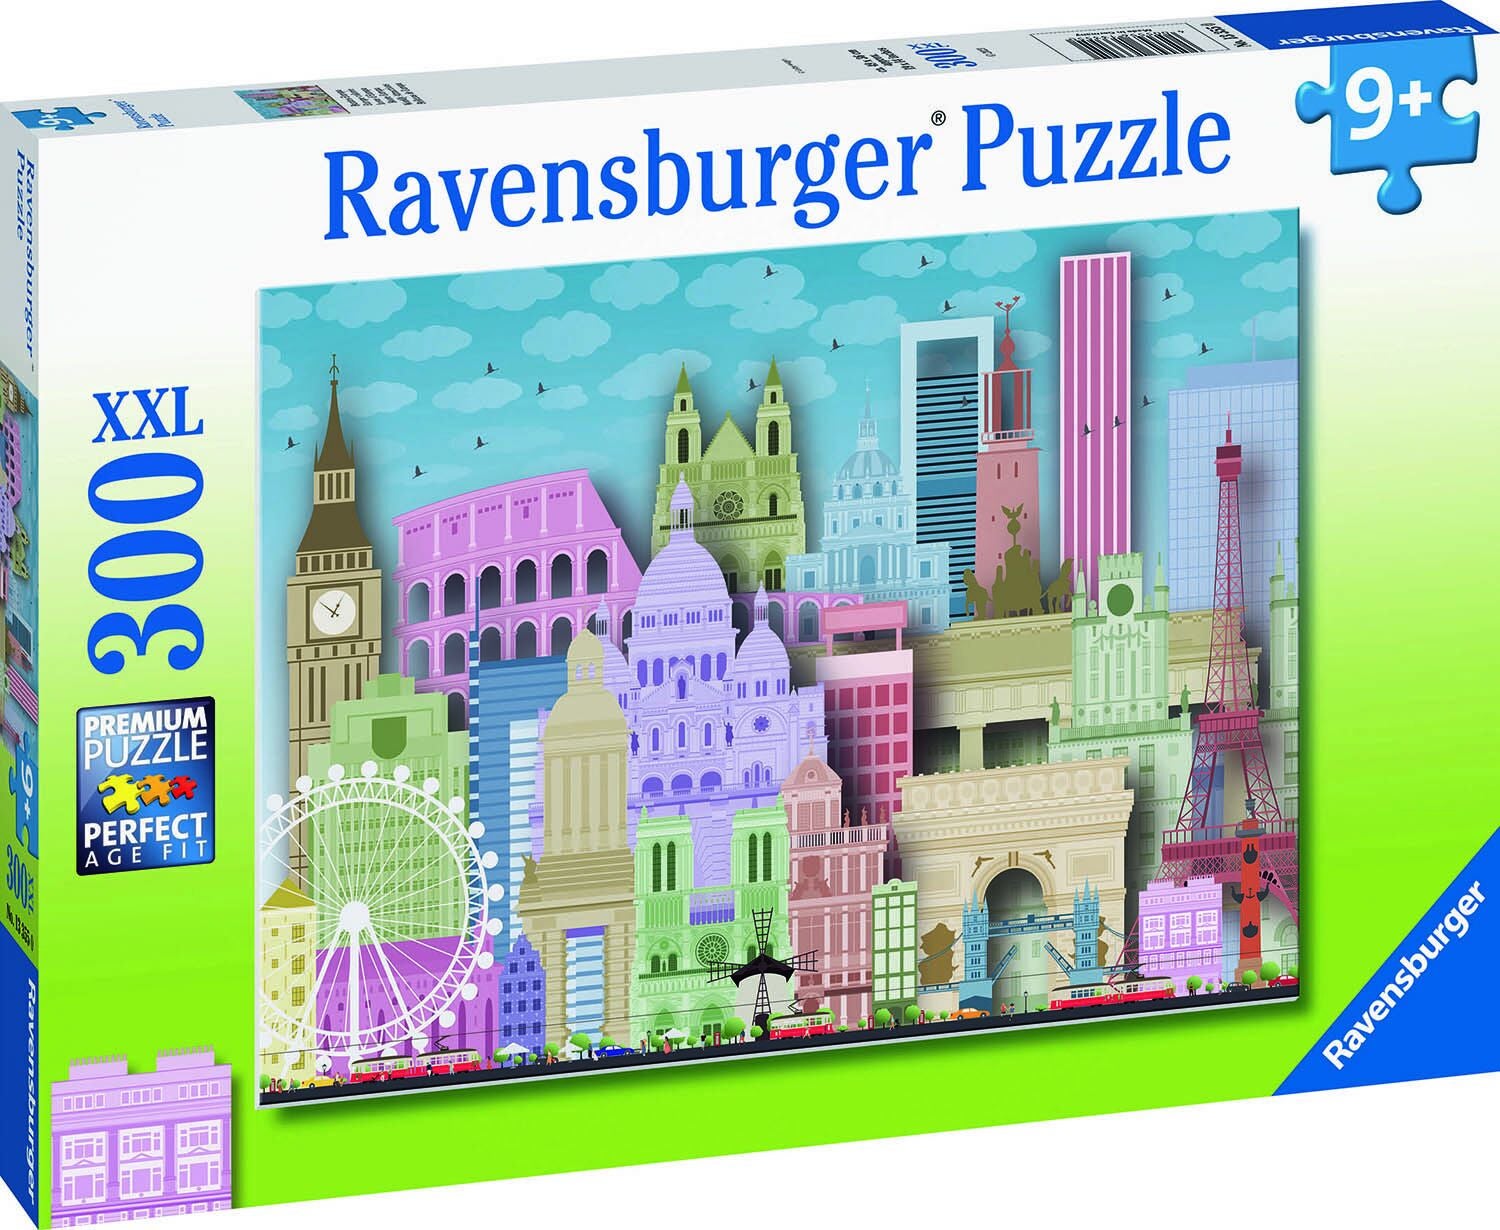 Ravensburger Puzzle Europakarte 300 Teile von Ravensburger